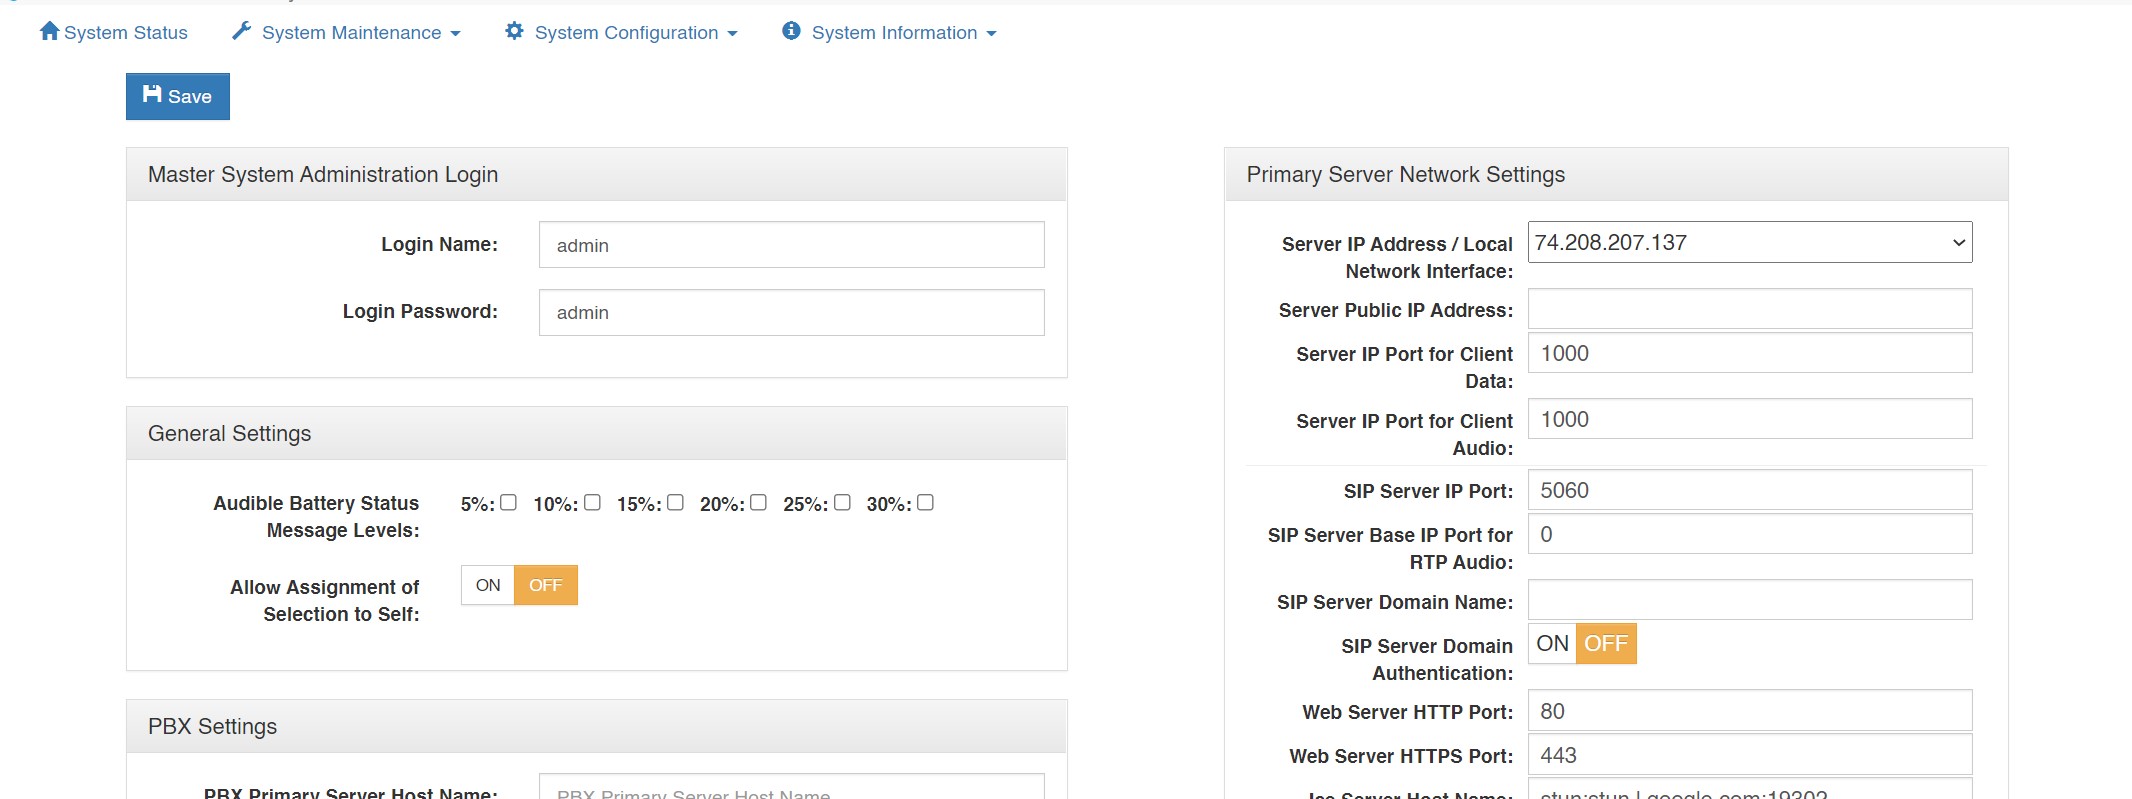 screenshot of vcom system administration system settings menu